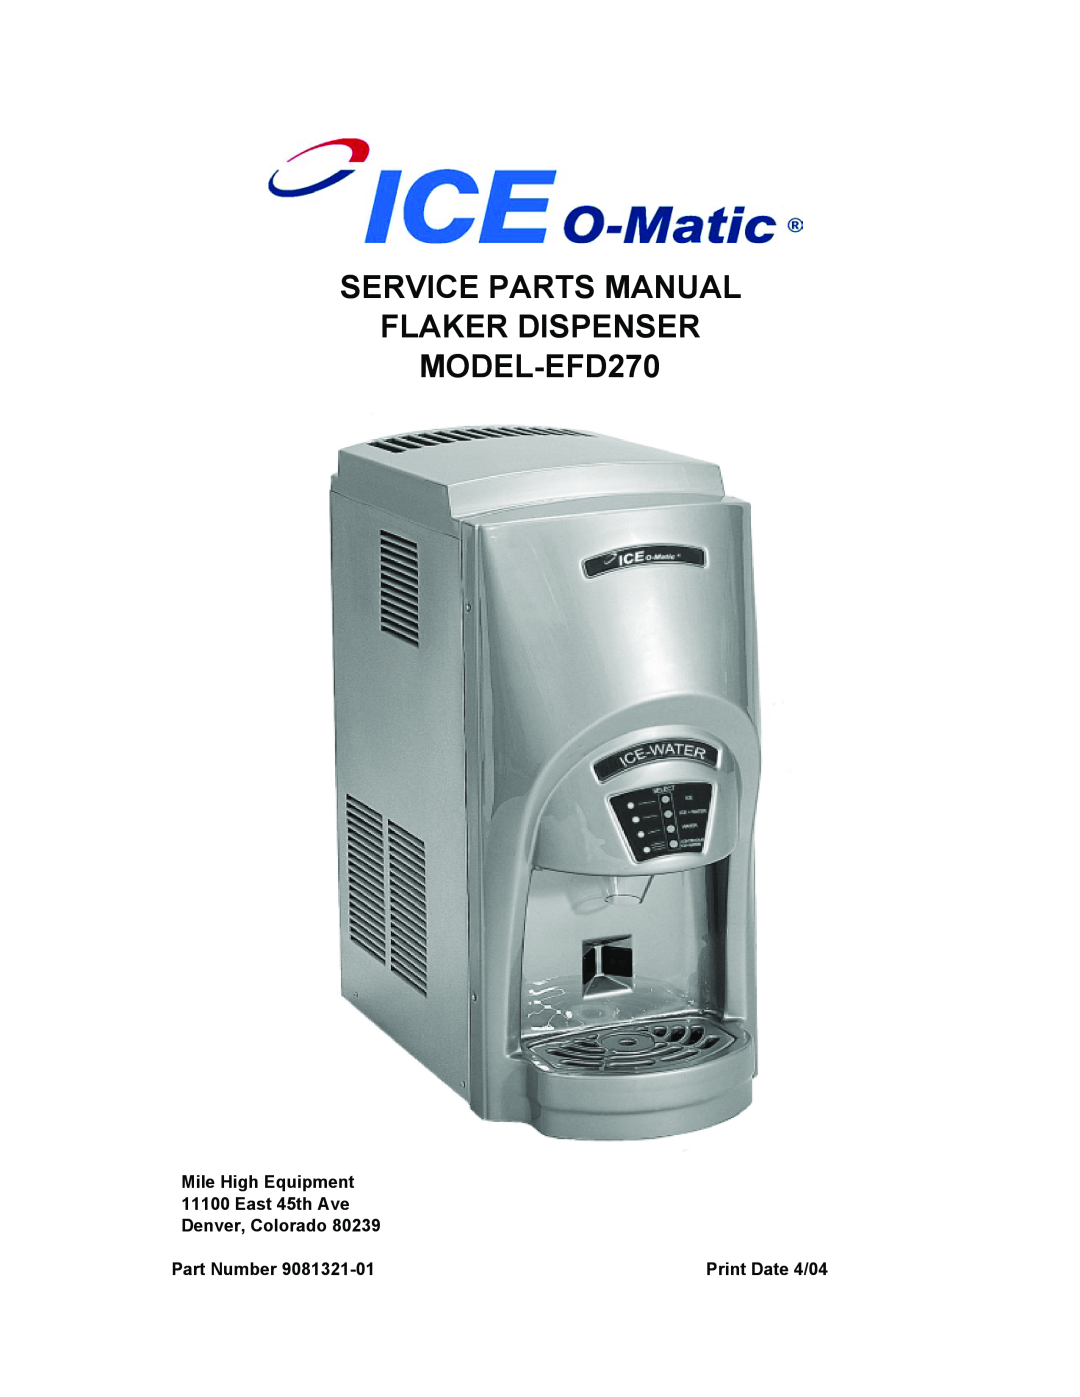 Ice-O-Matic manual SERVICE PARTS MANUAL FLAKER DISPENSER MODEL-EFD270, Part Number, Print Date 4/04 